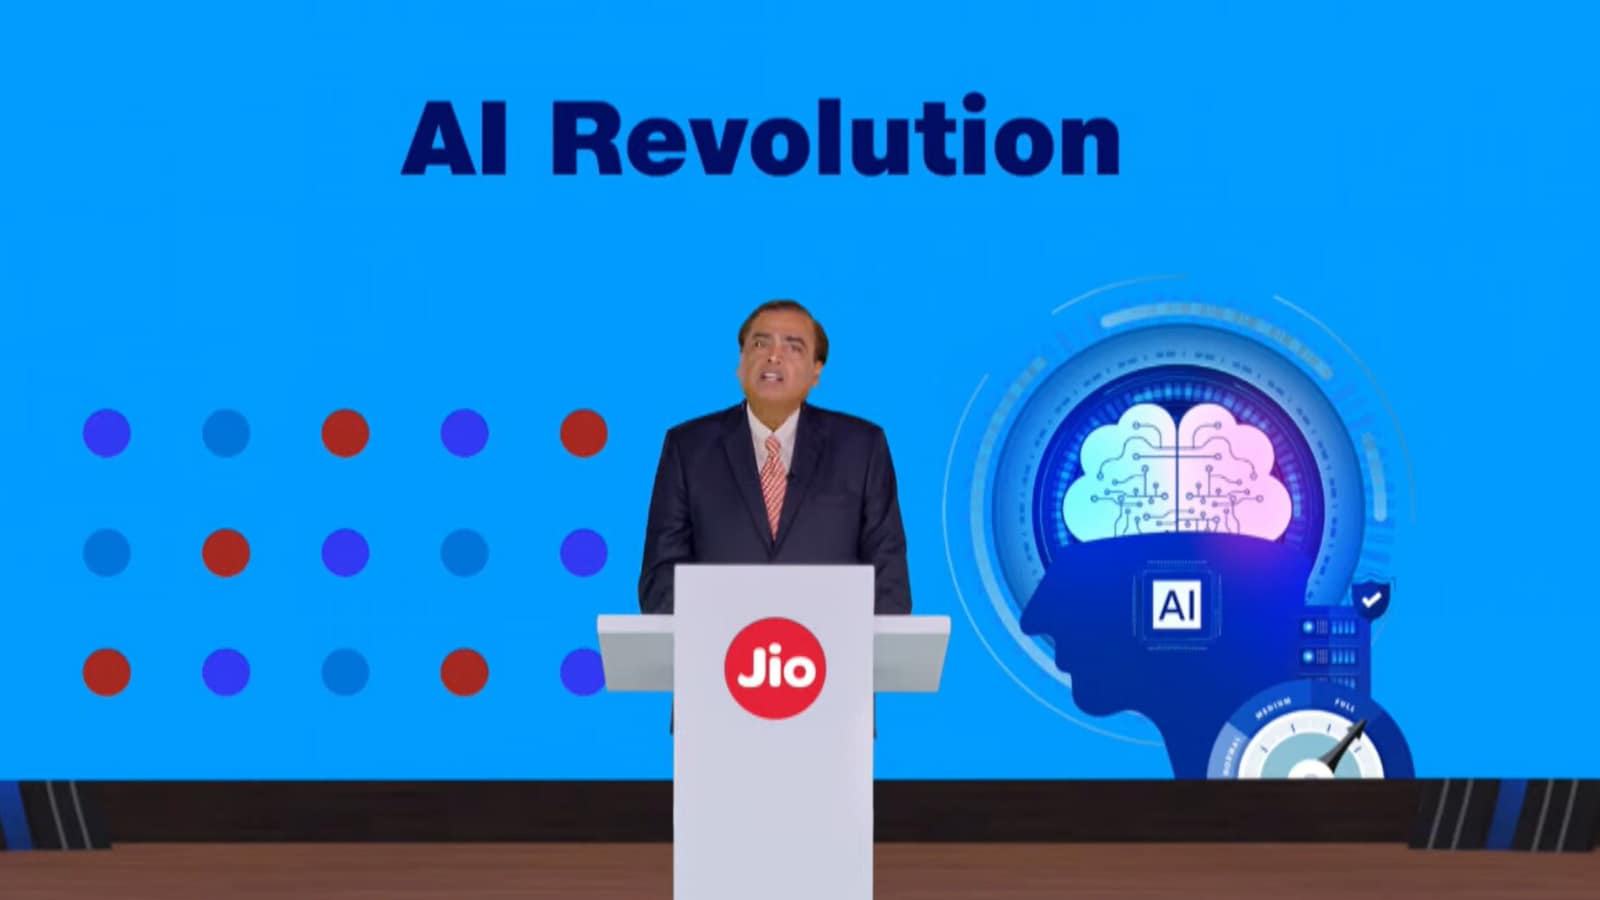 Mukesh Ambani Takes on Challenge to Build Indian AI Model